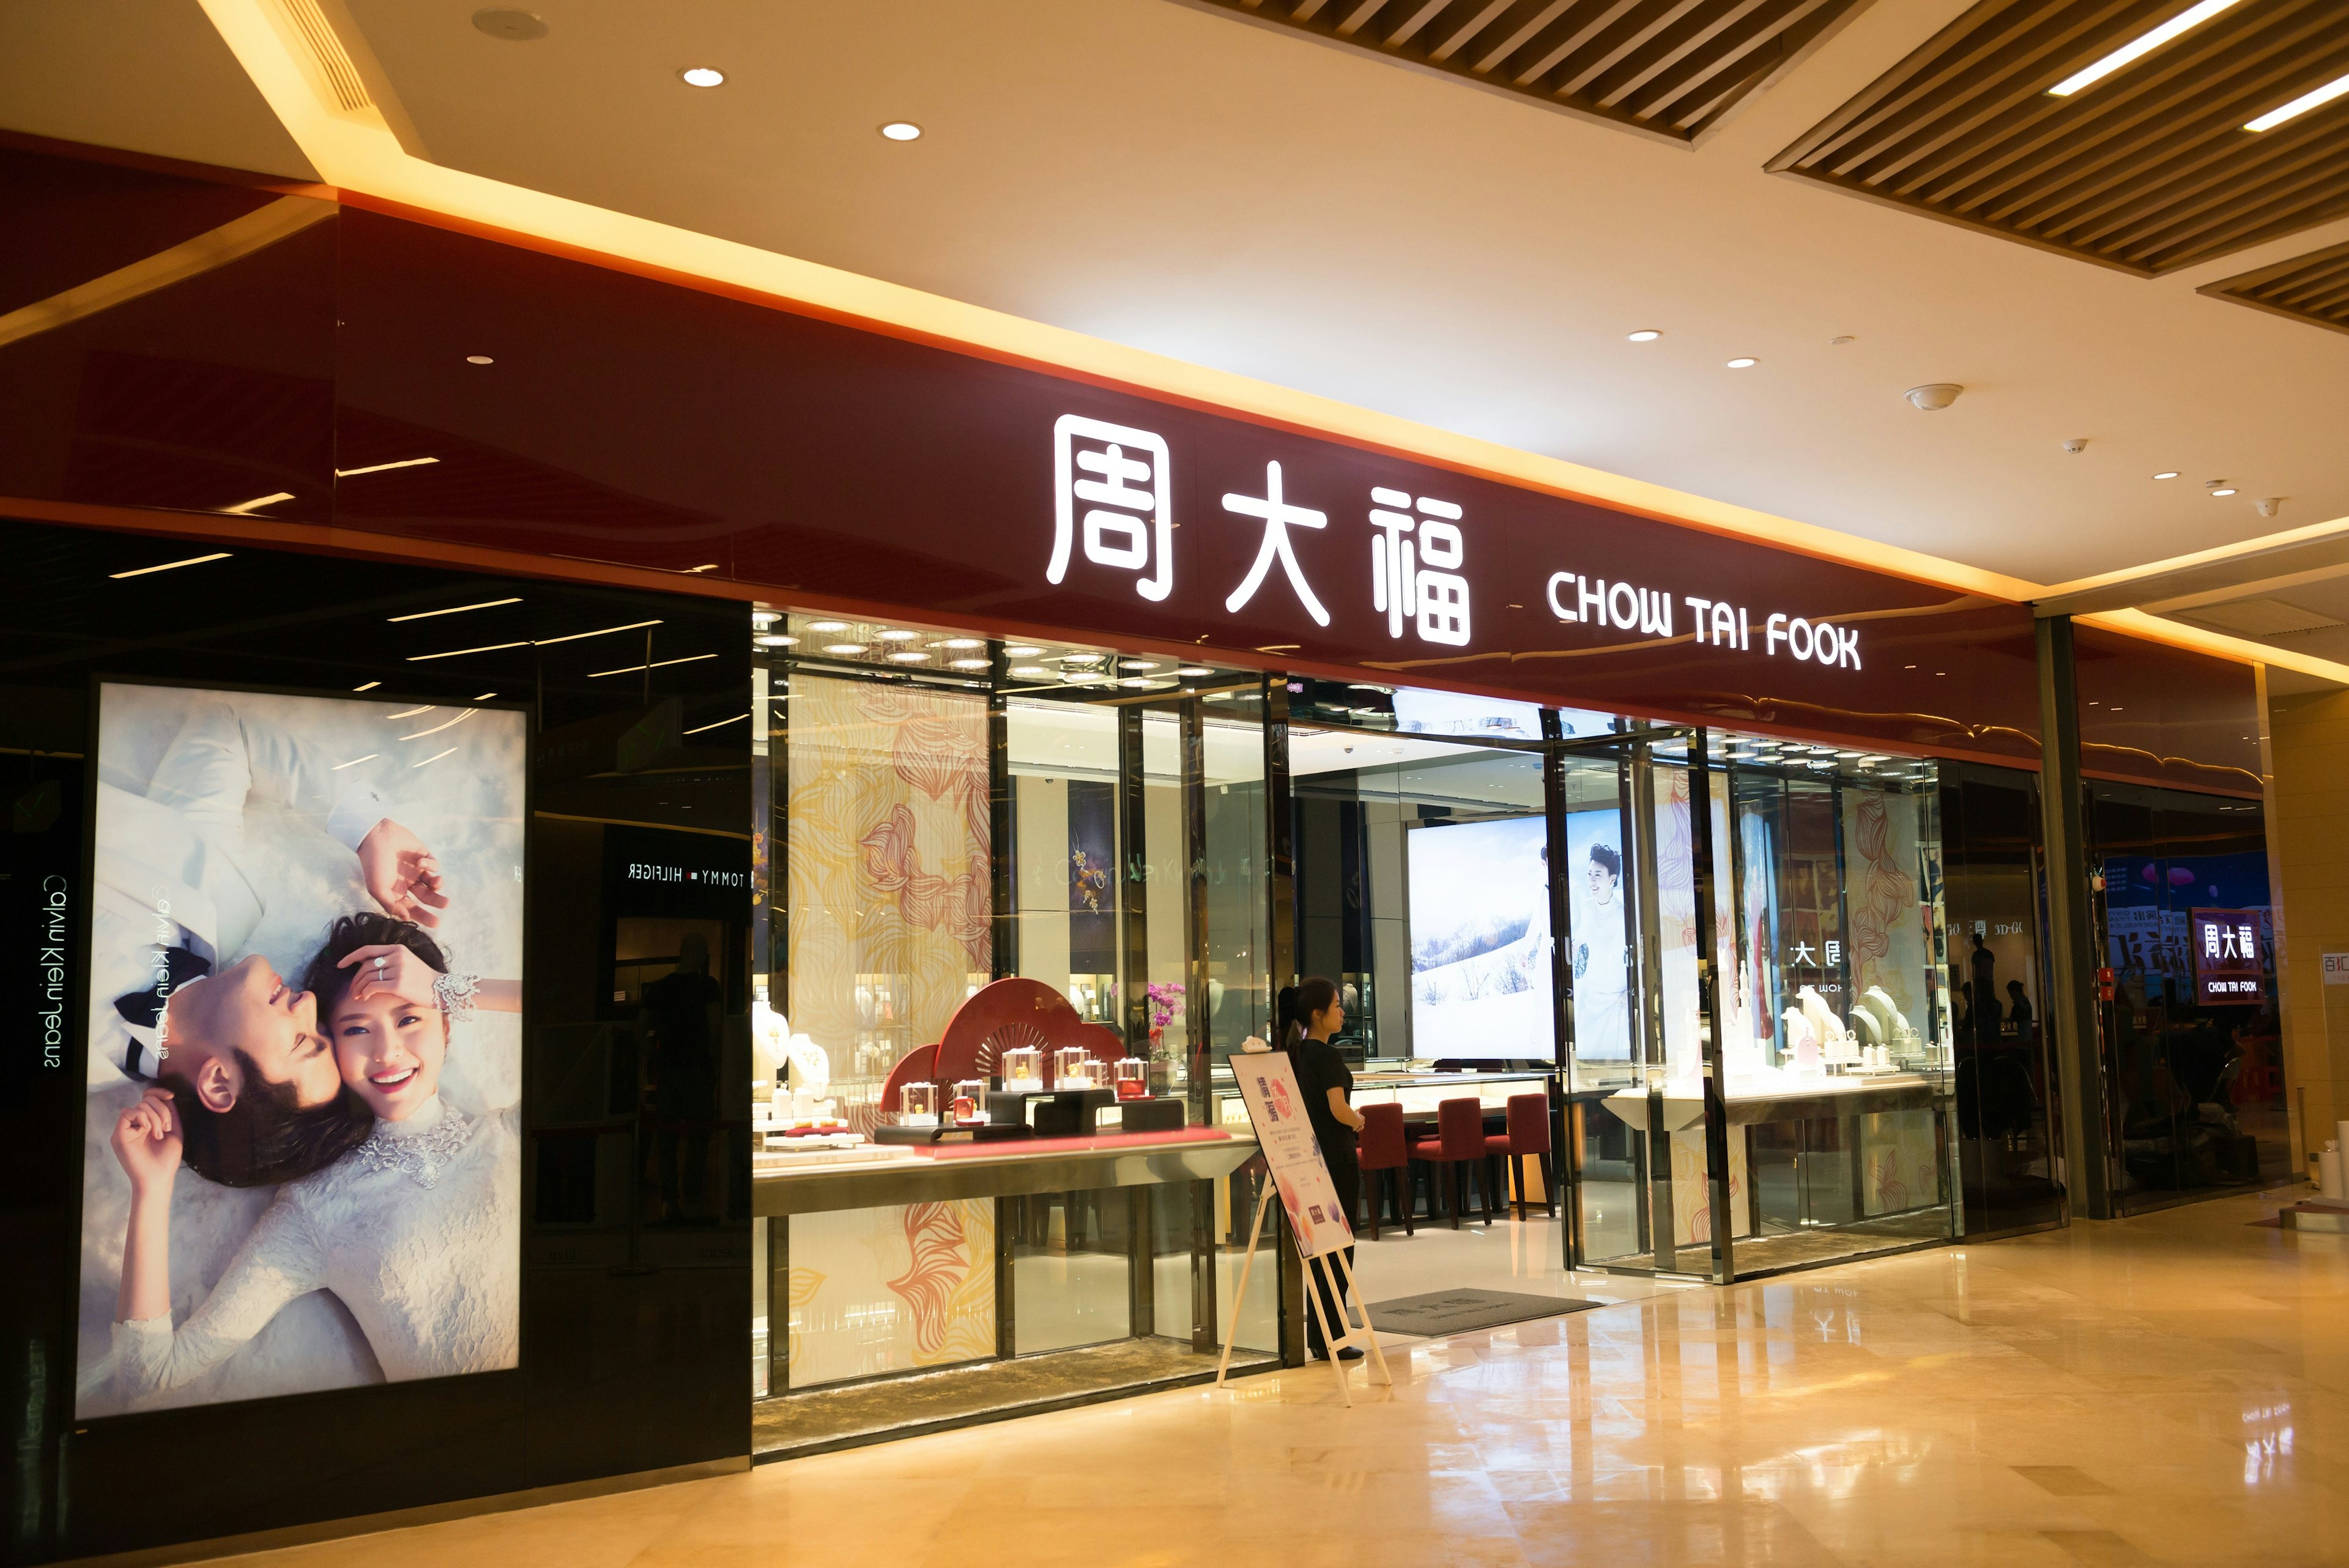 A Chow Tai Fook store in Zhongshan, China in April 2016. (<a href="http://www.shutterstock.com">Shutterstock</a>0